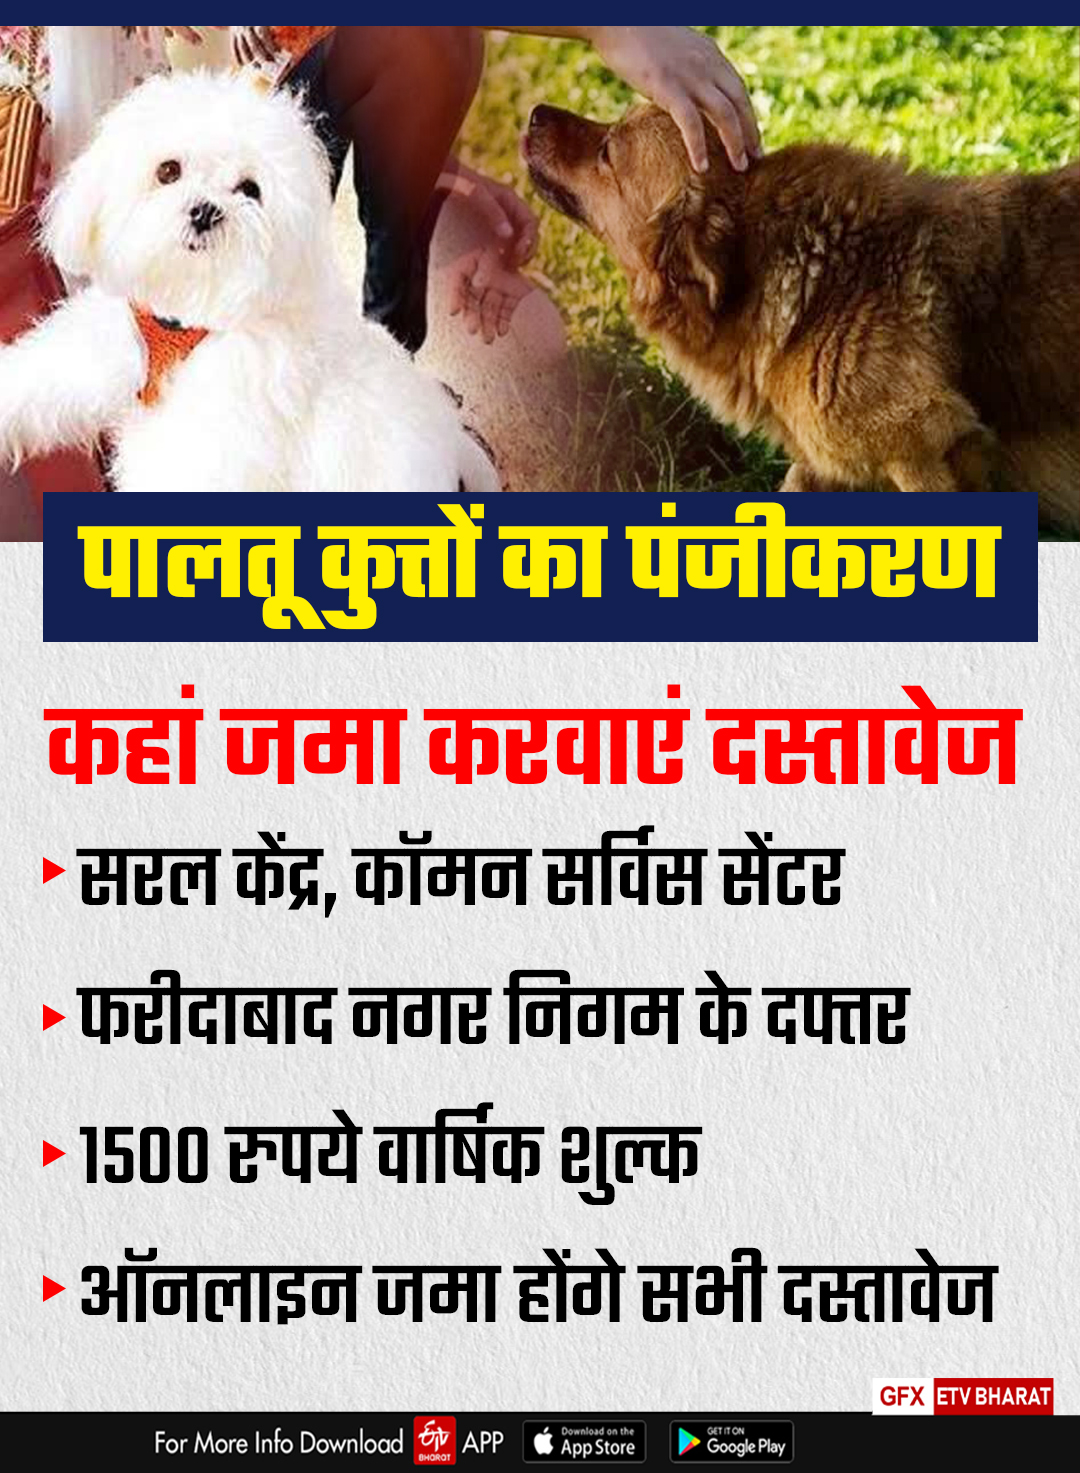 pet dog registration in haryana